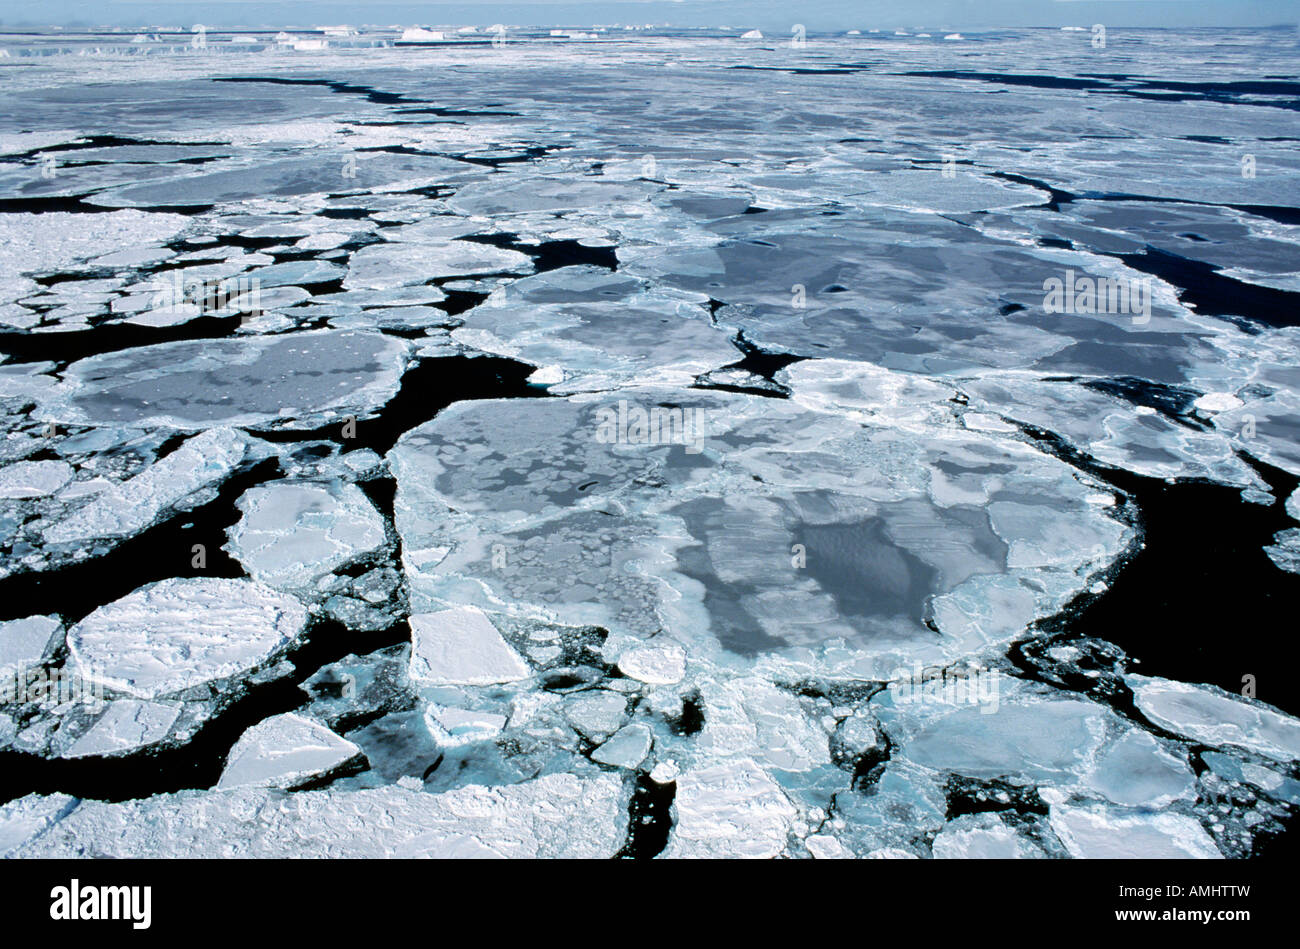 Packeis in der Weddell-Meer Antarktis Antarktis Eis zusehends Eislandschaften Eisschollen Kaelte Entwurfsprojekten Meer Meereis Natu Stockfoto